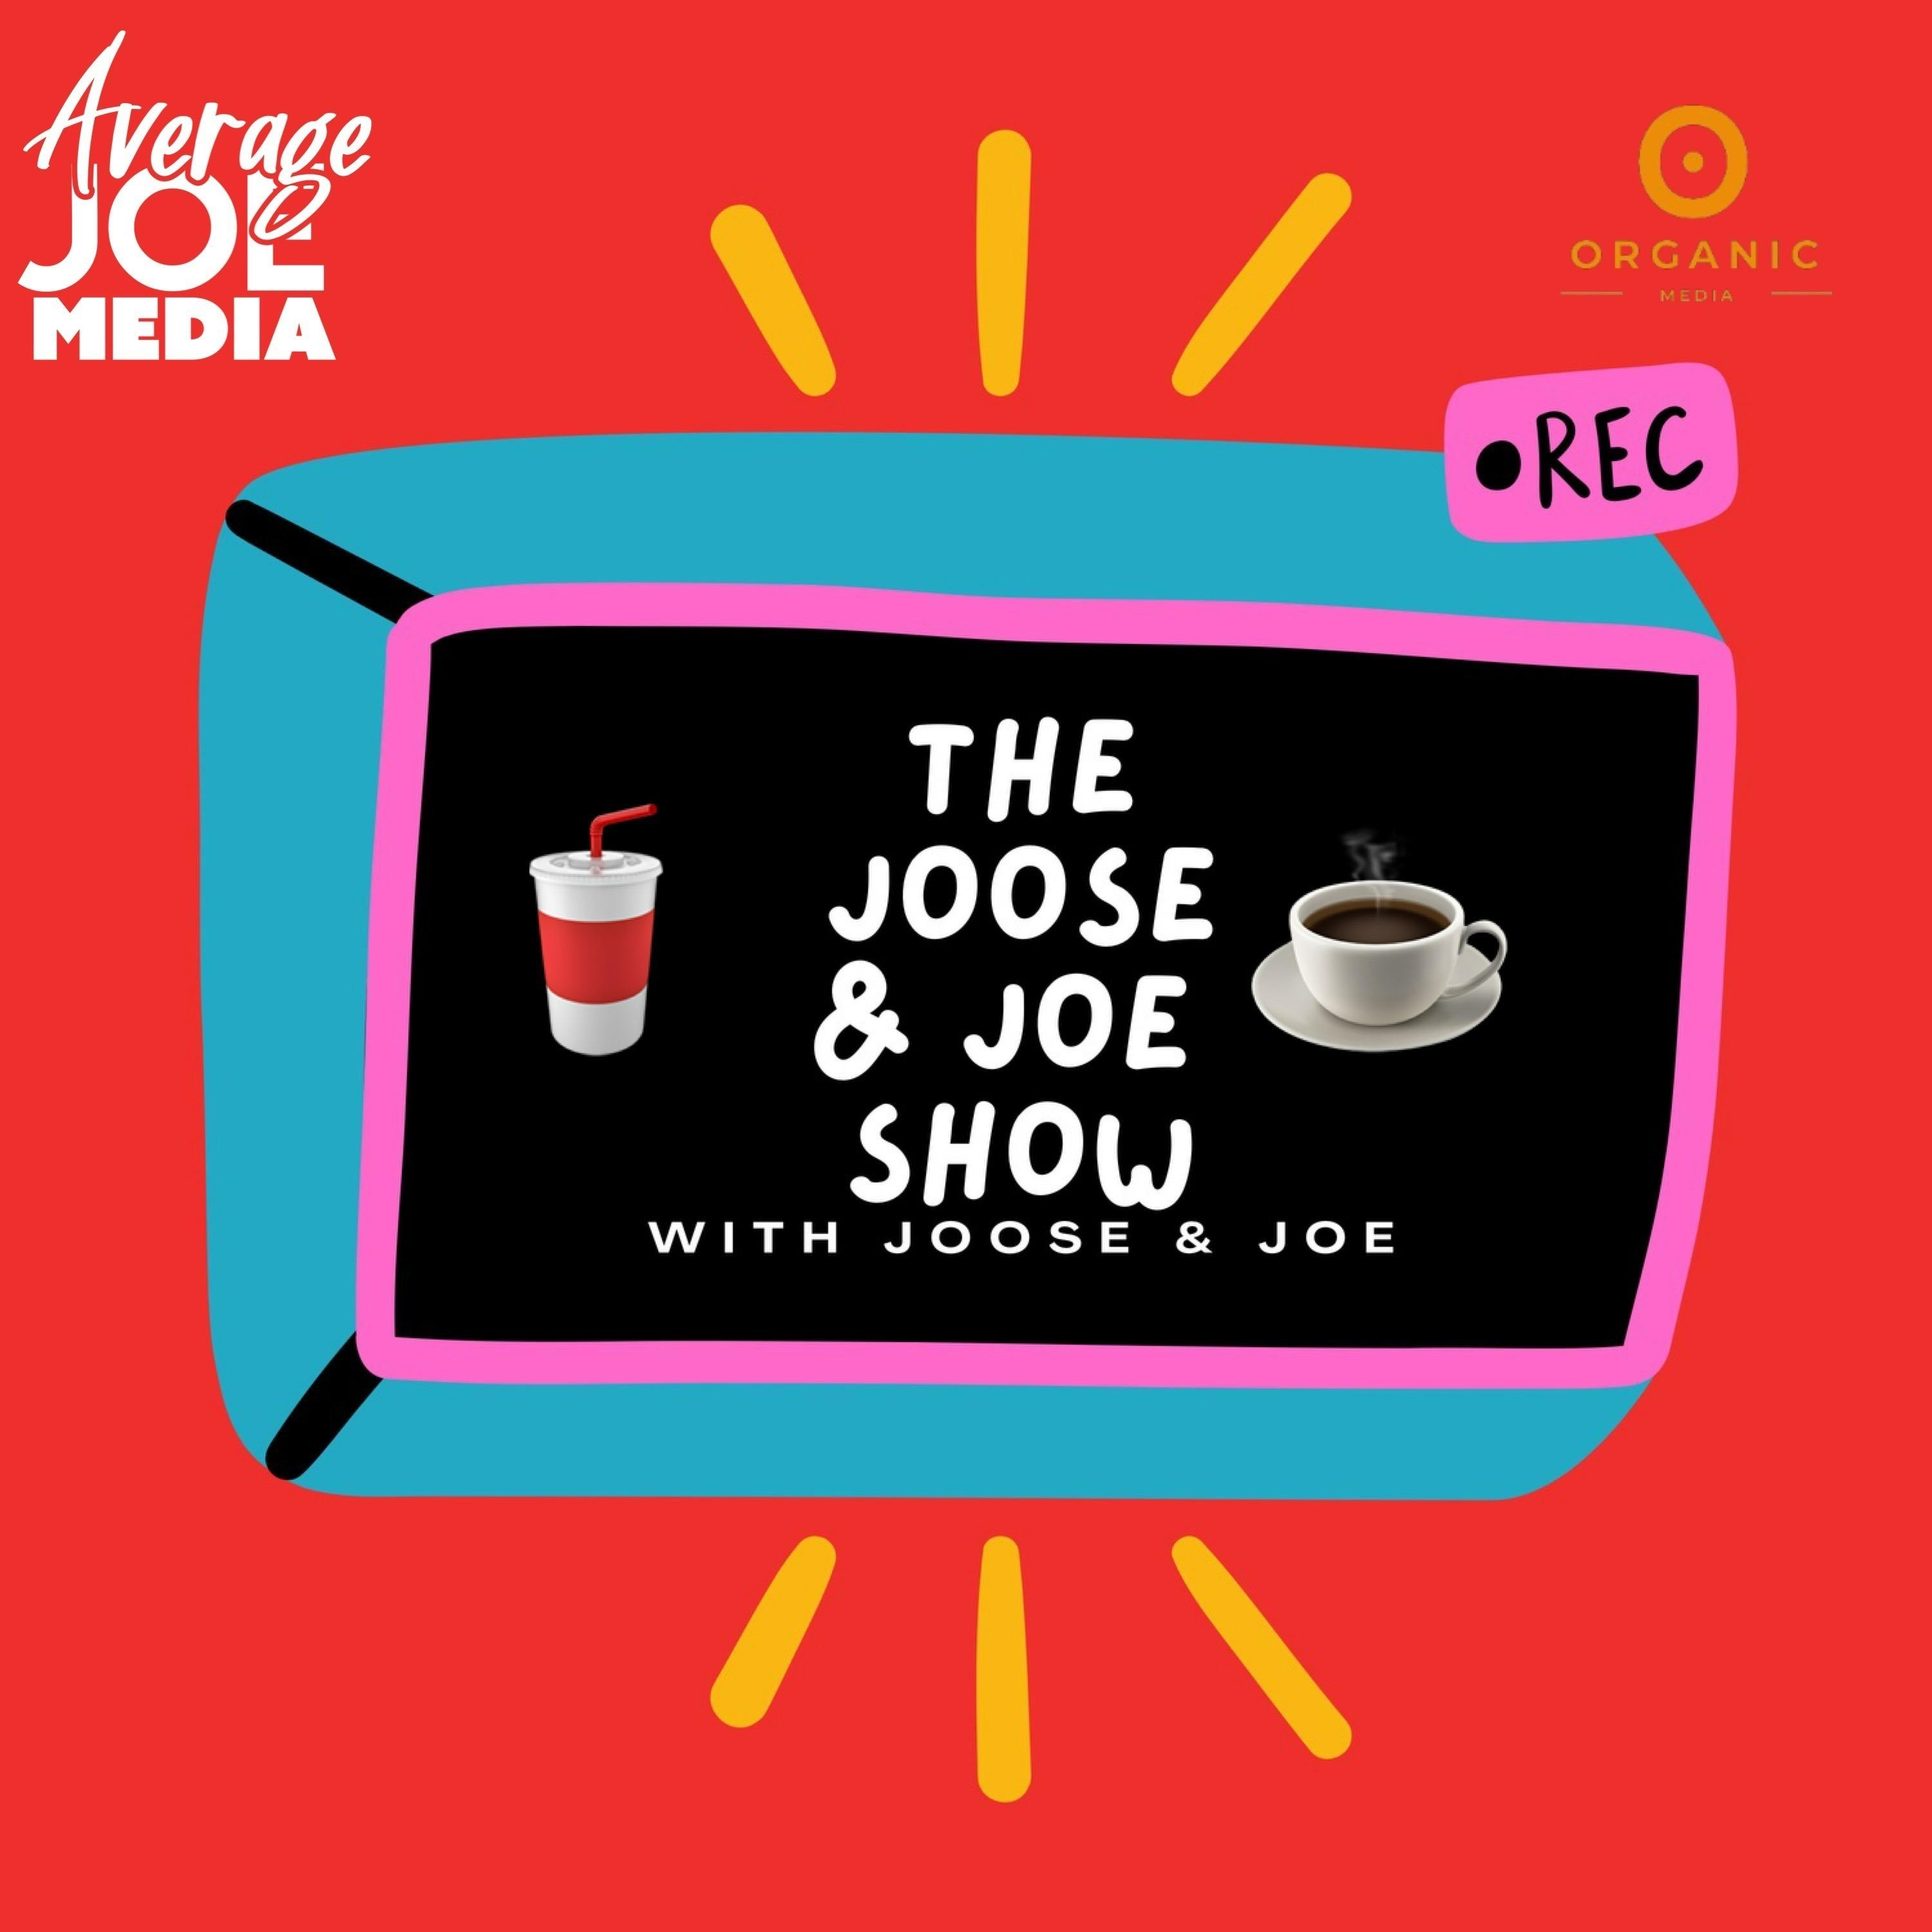 Joose & Joe Show